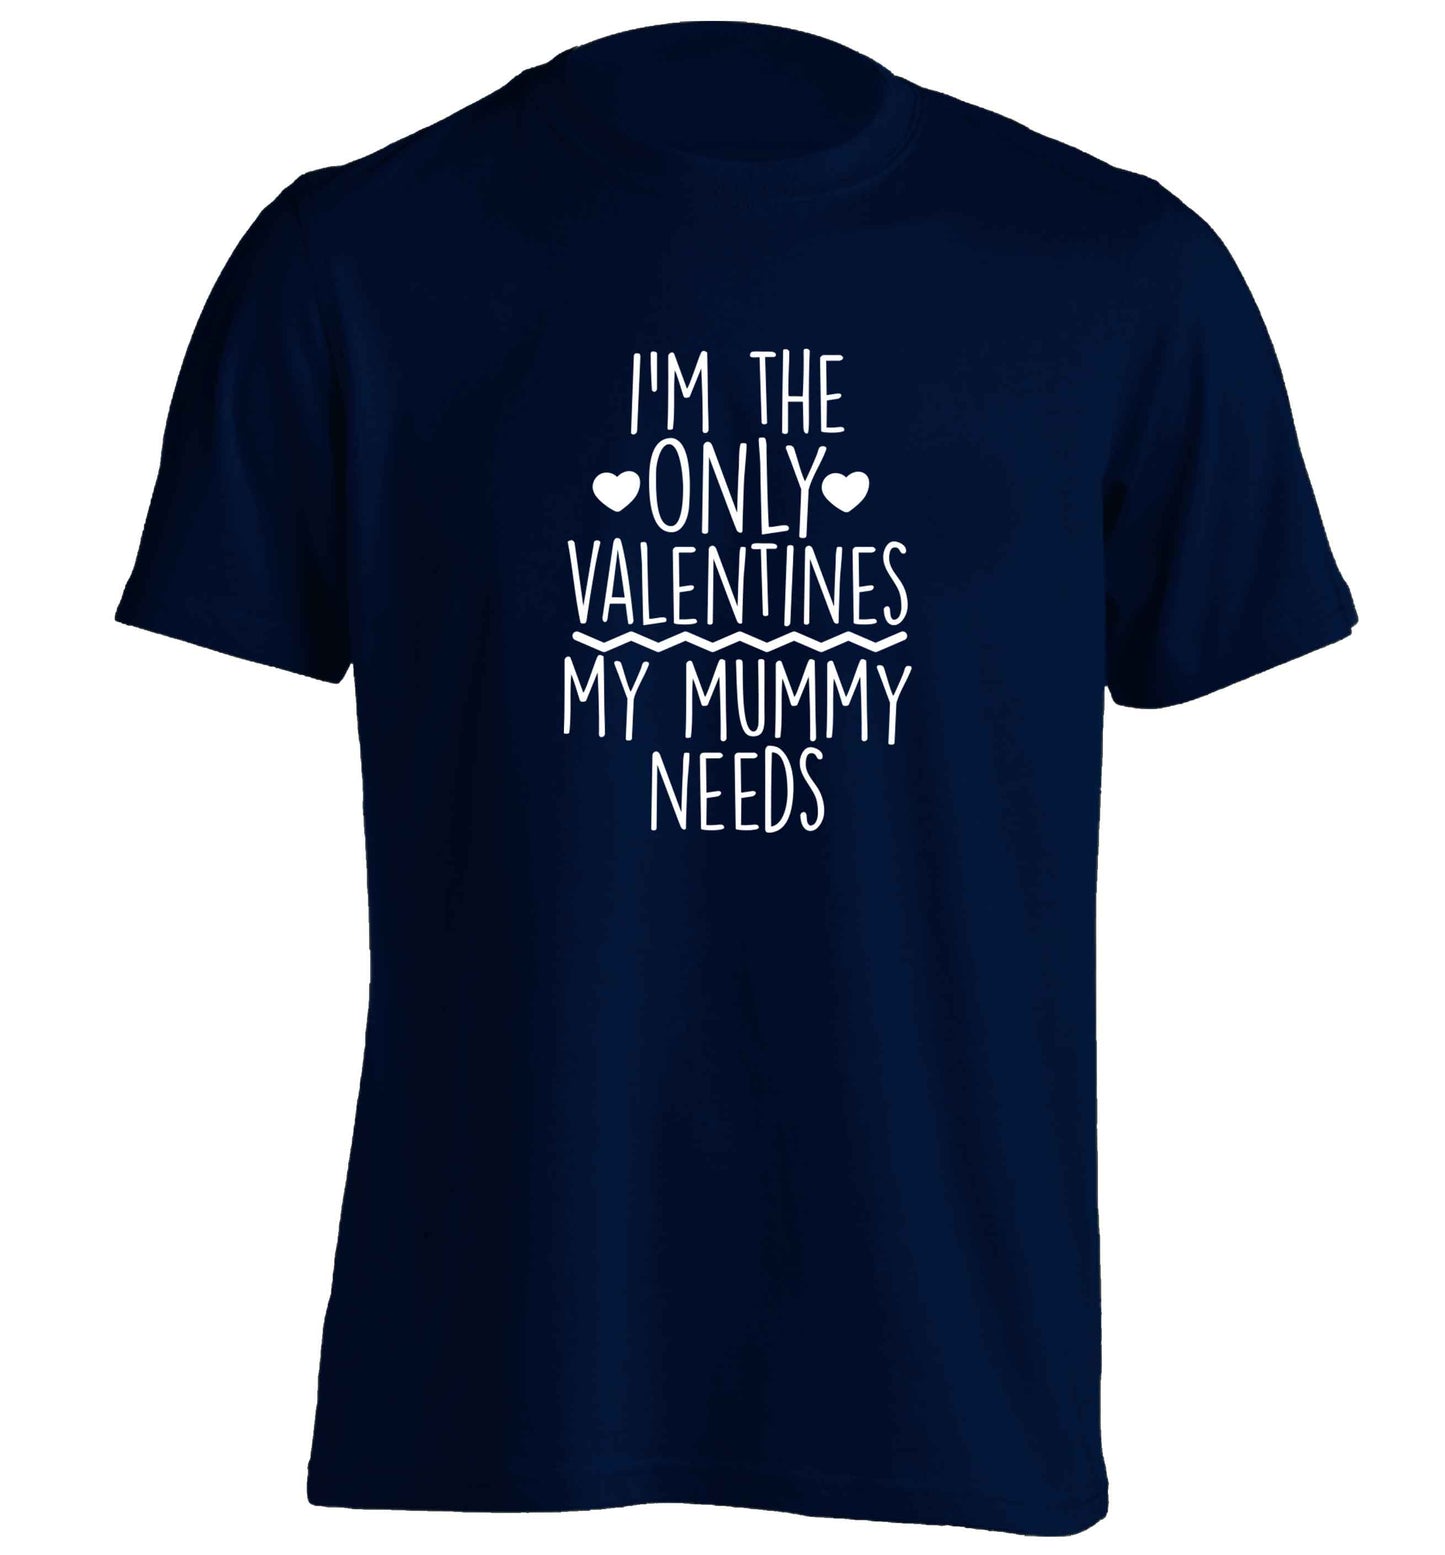 I'm the only valentines my mummy needs adults unisex navy Tshirt 2XL